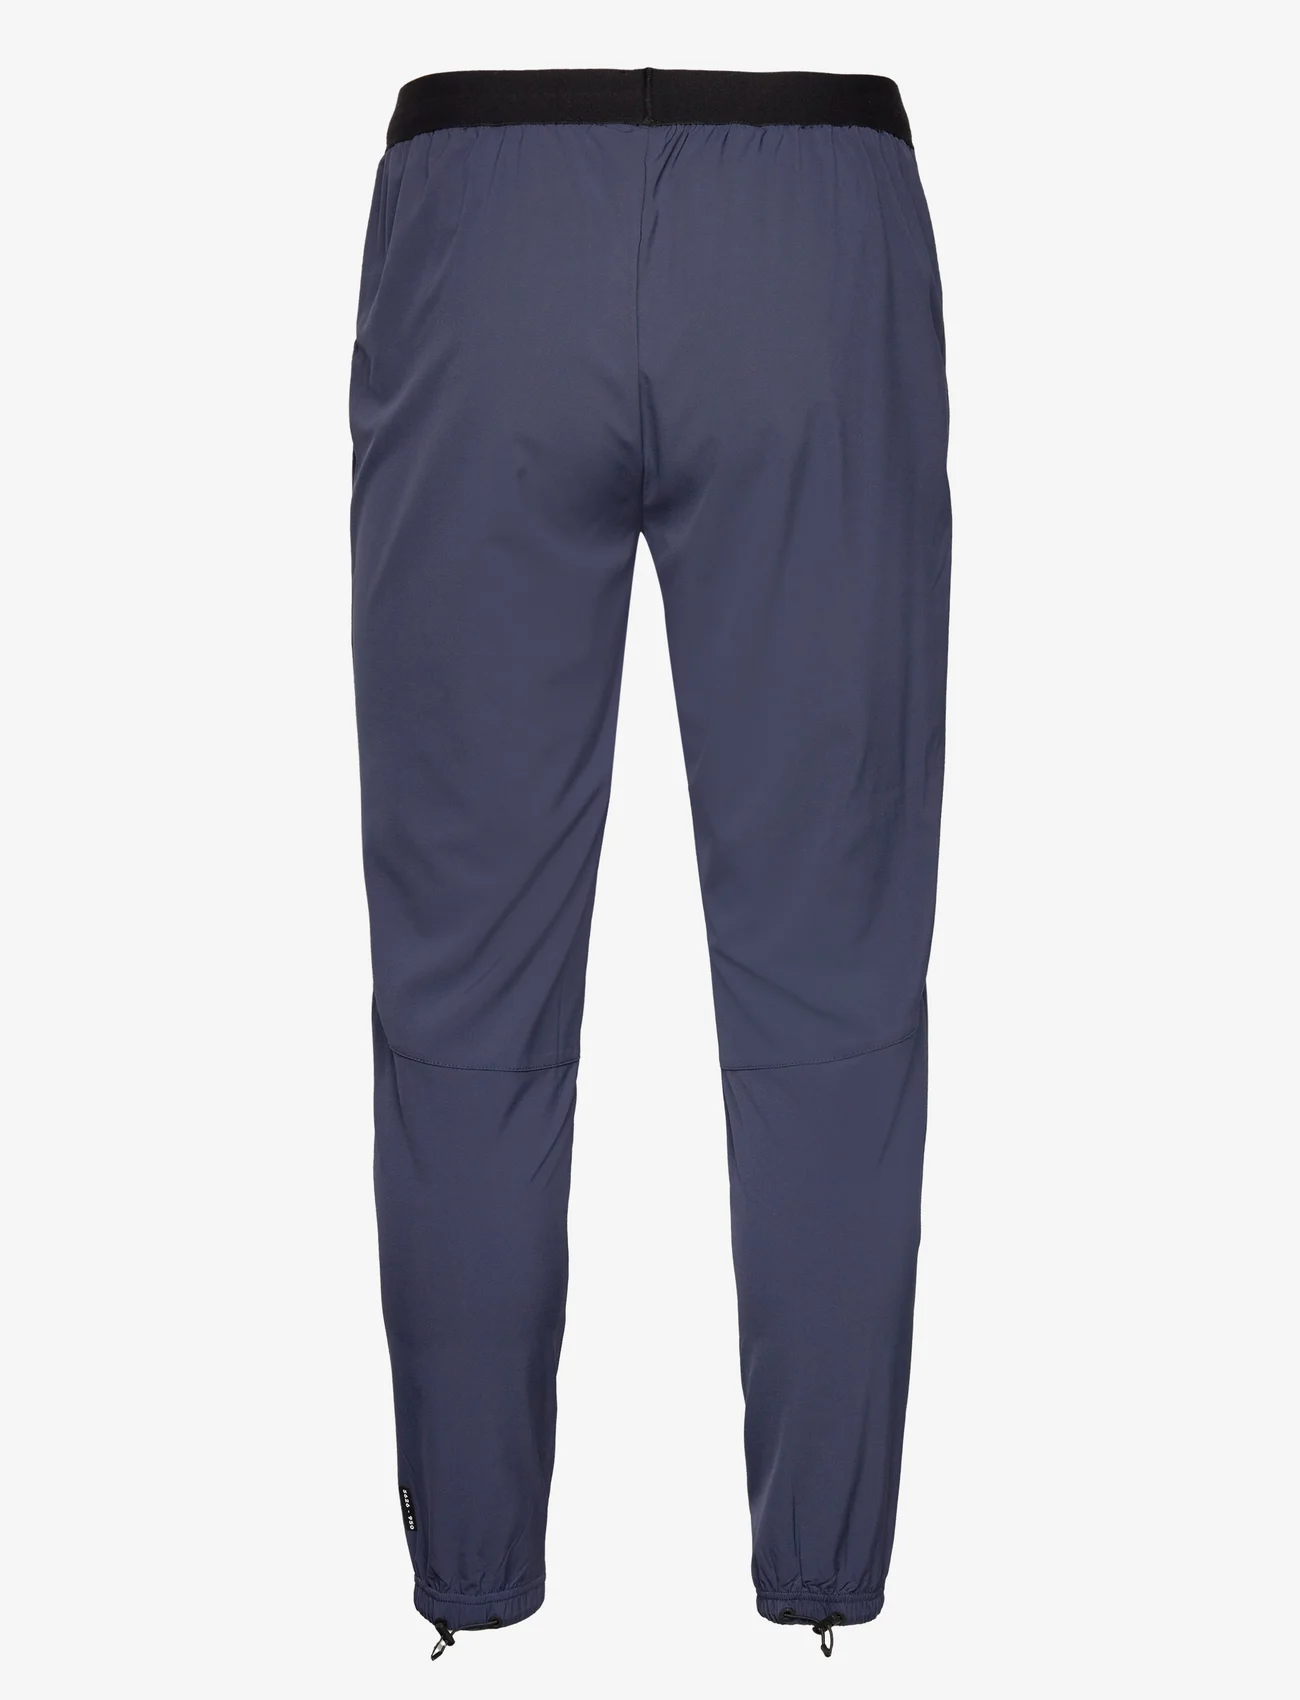 Virtus - Colin M Functional Pants - spodnie treningowe - blue nights - 1